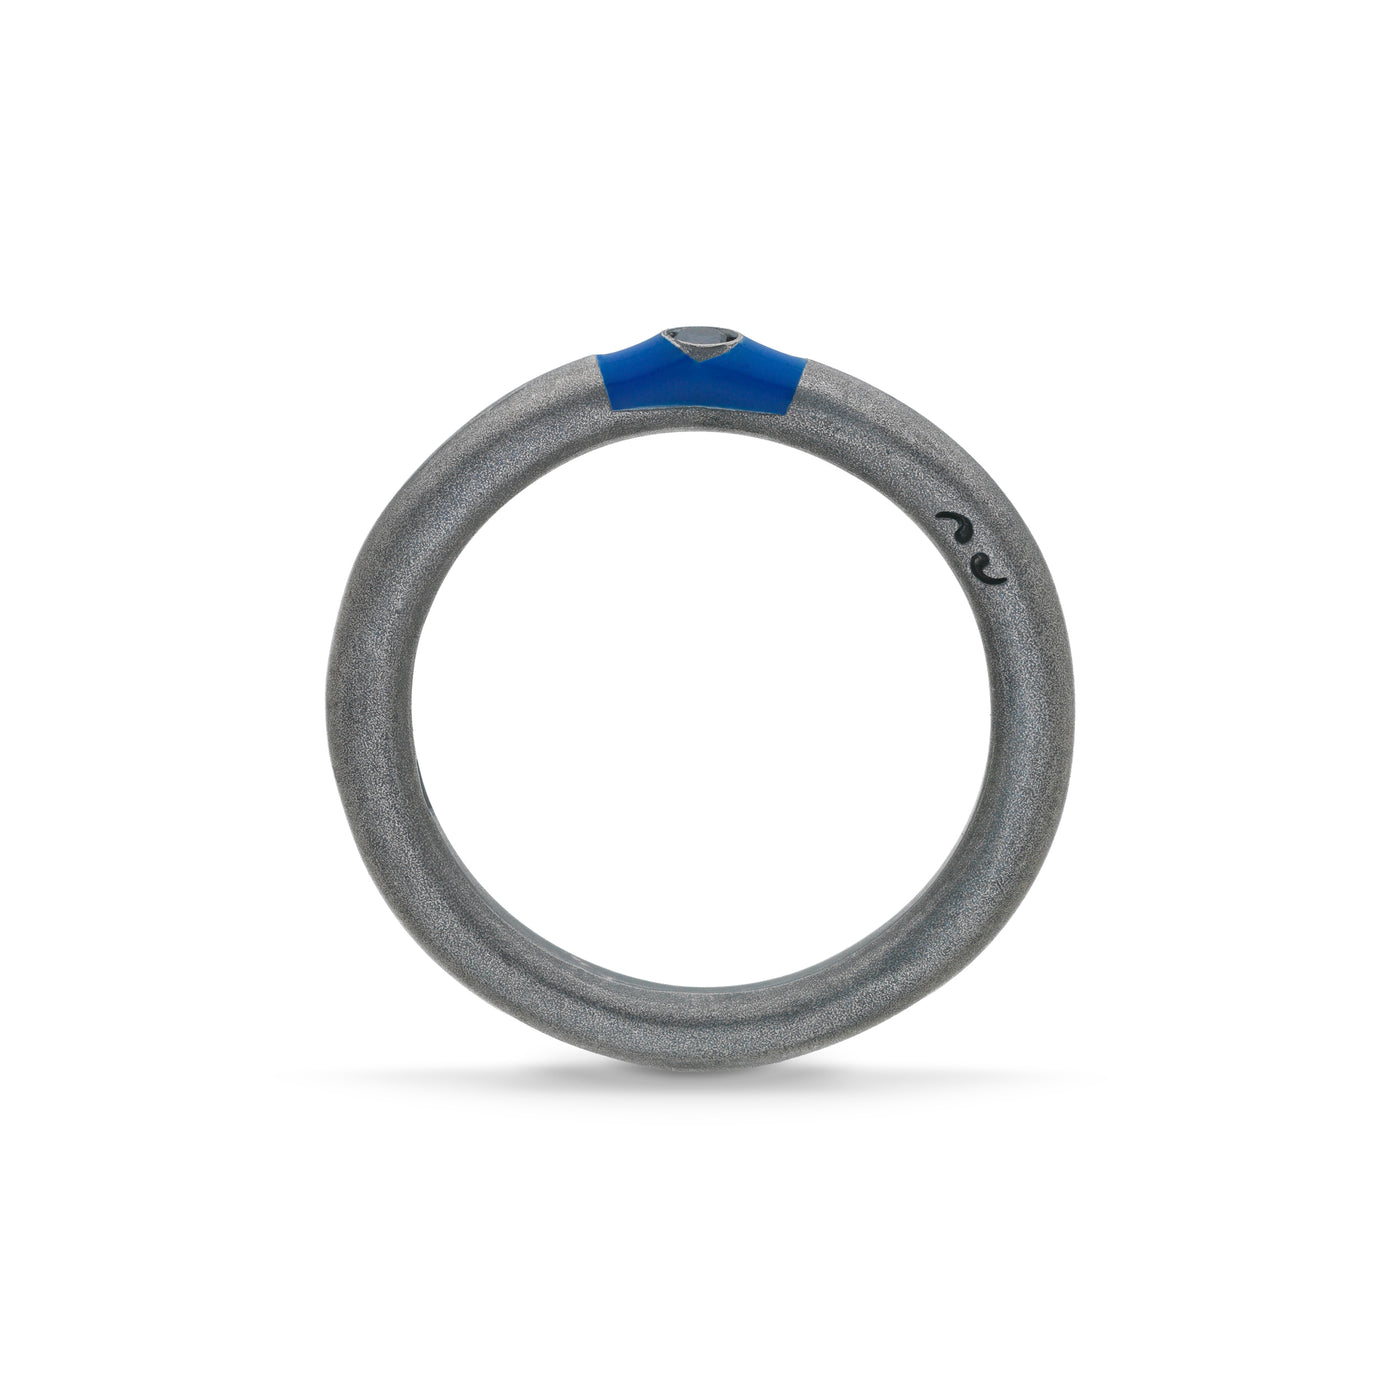 ULYSSES Slick Oxidized Ring with black diamond and blue enamel